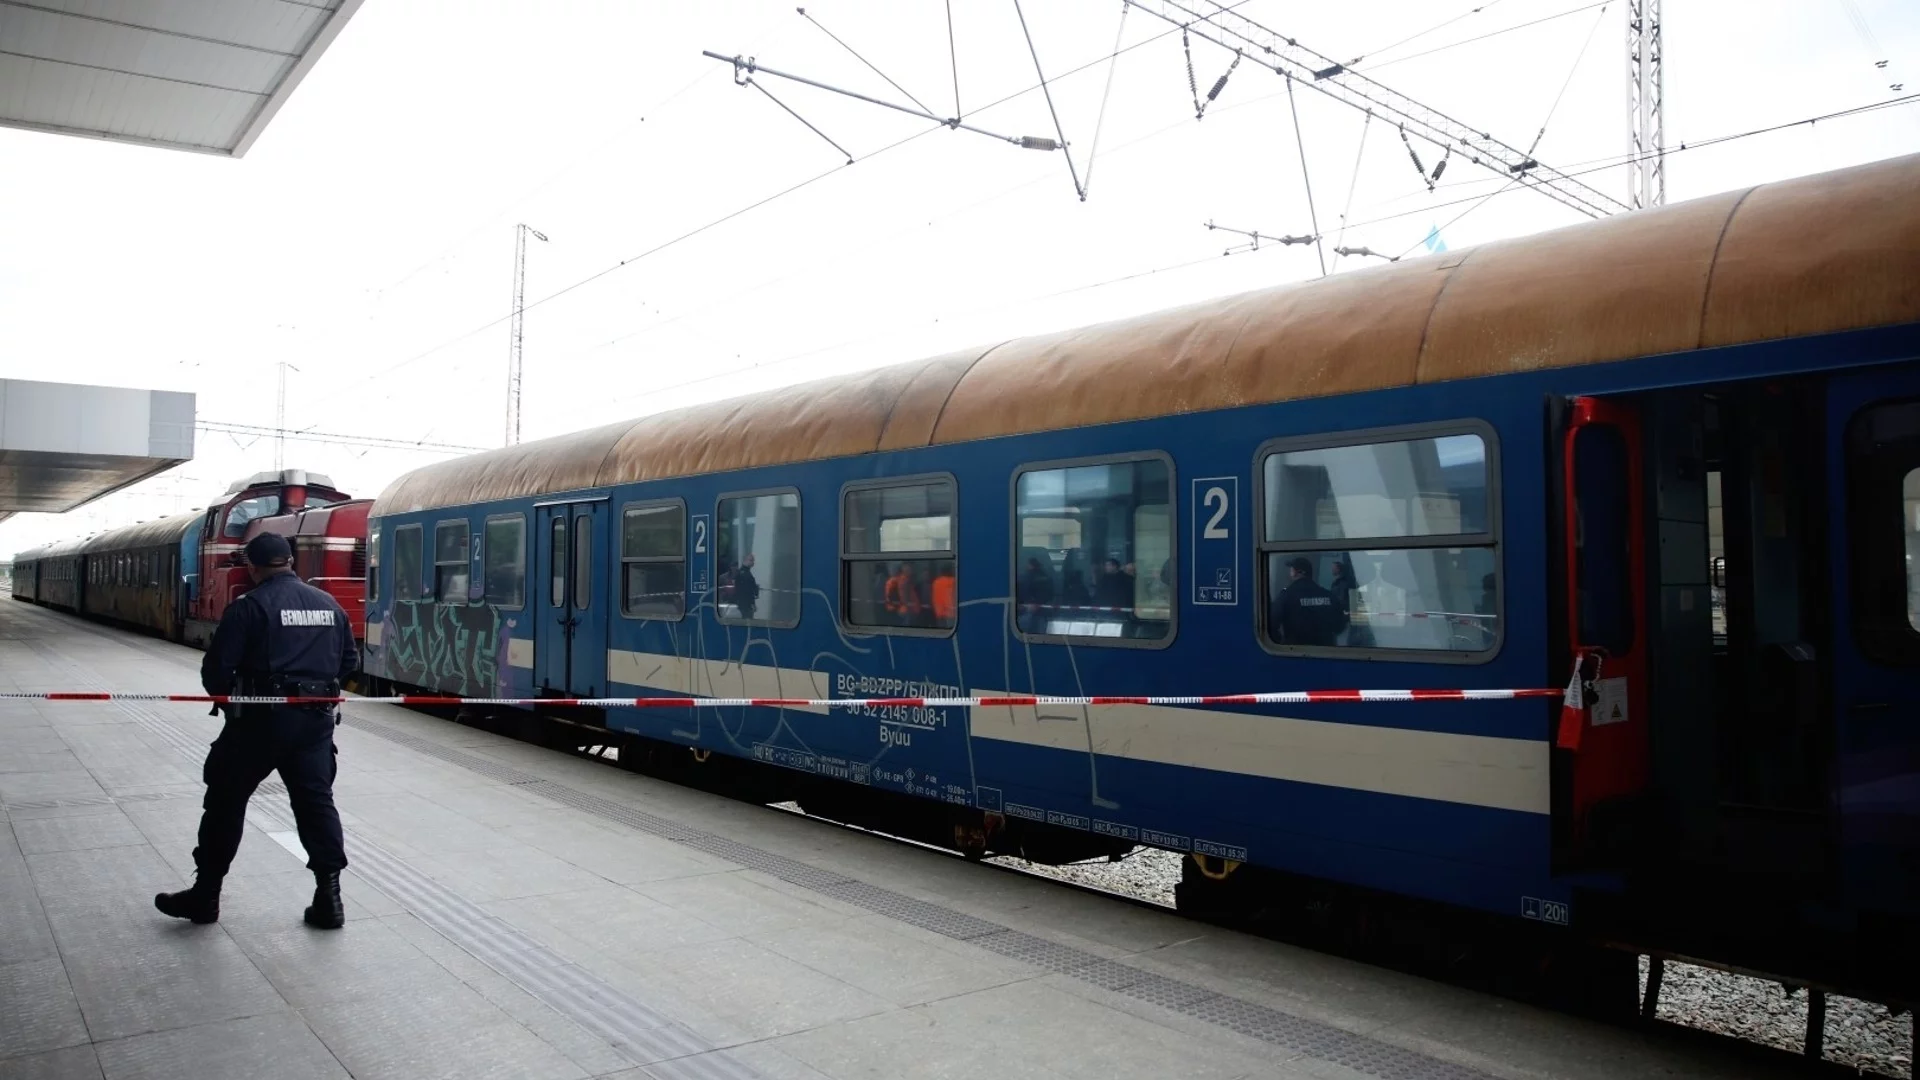 Влак и локомотив се удариха челно на Централна гара в София, има пострадали (СНИМКИ)